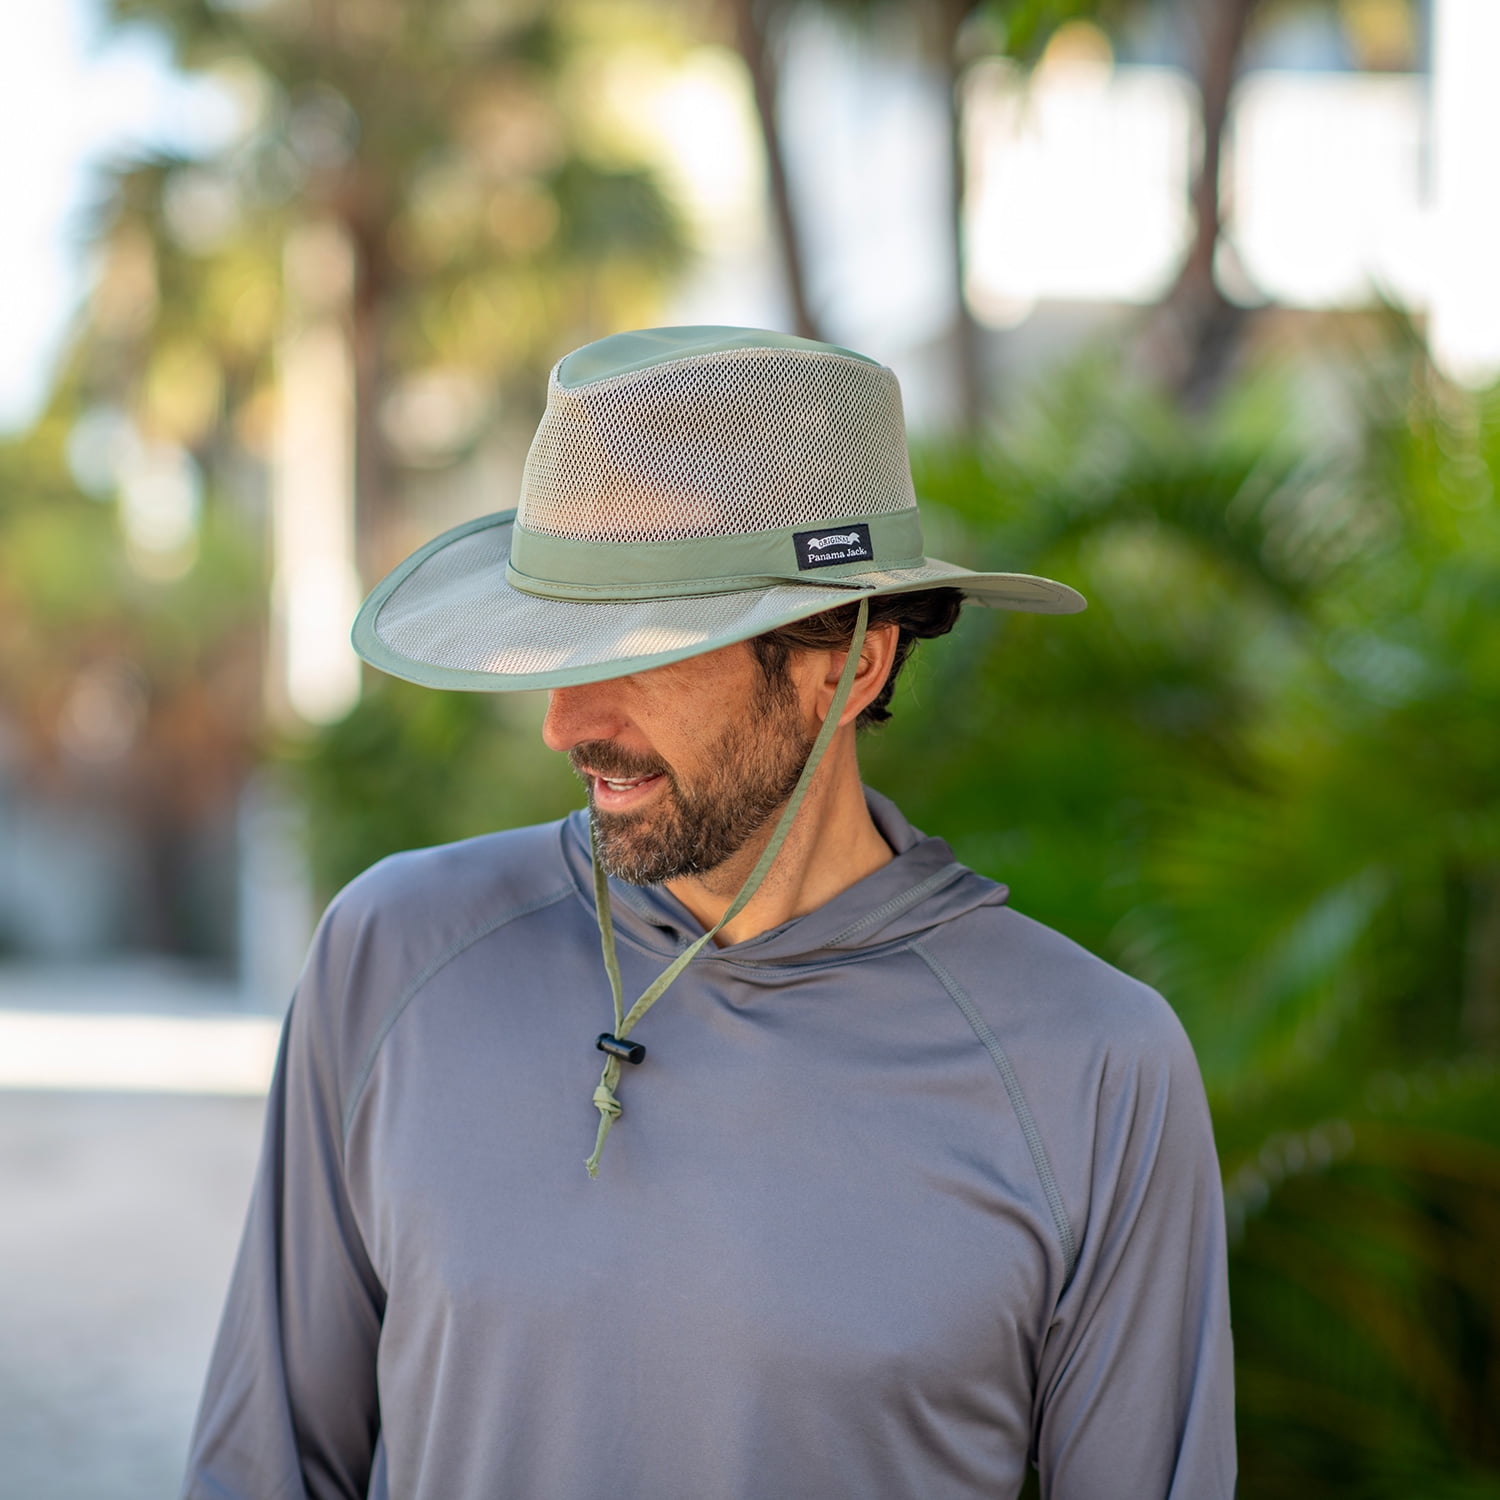 Panama Jack Safari Straw Hat - Lightweight, 3 Big Brim, Inner Elastic Sweatband, 3-Pleat Ribbon Hat Band (Black, Large/X-Large)